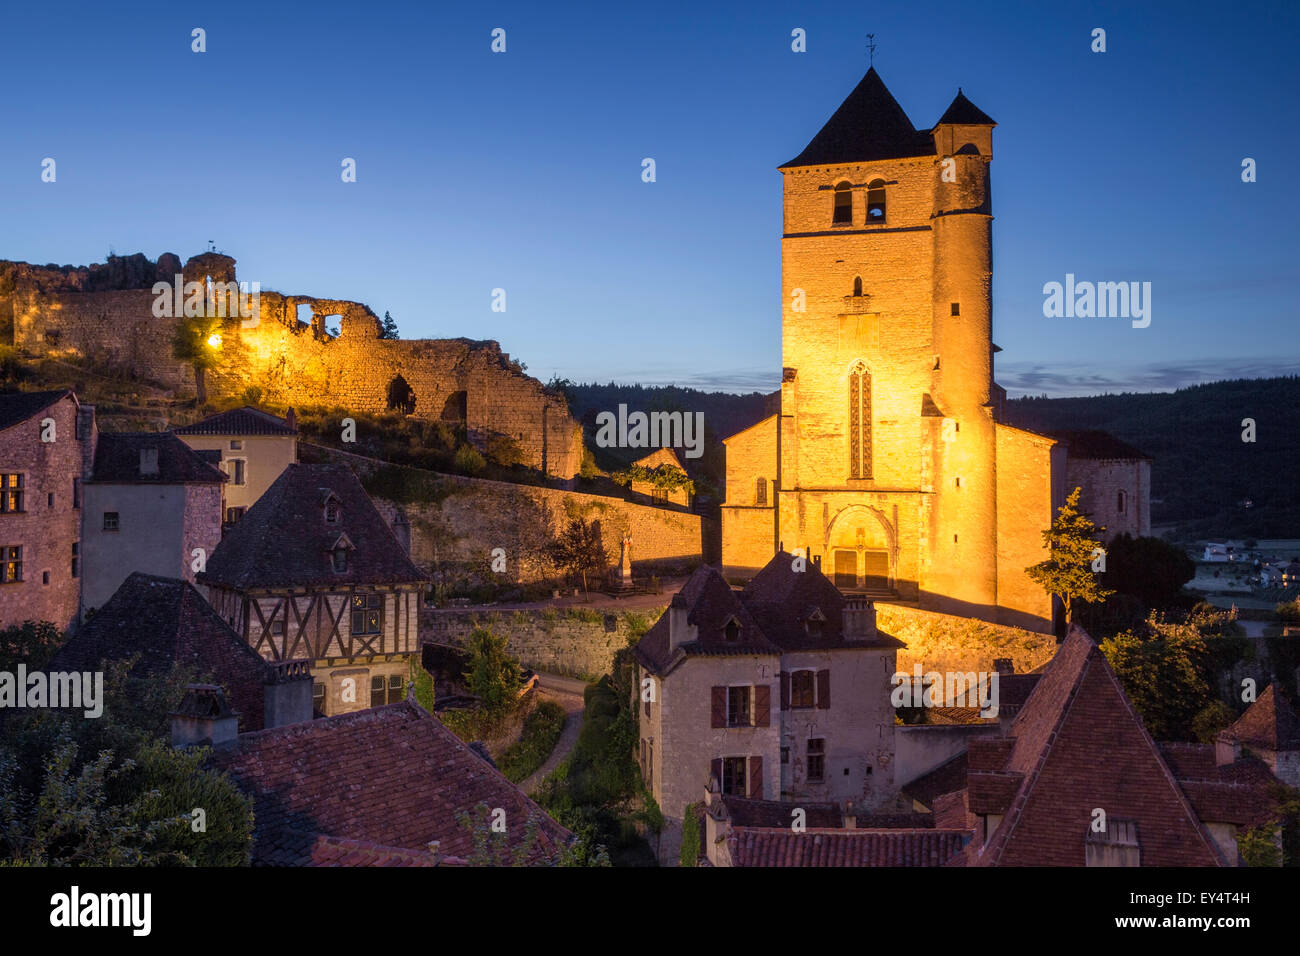 Crepuscolo sulla città medievale di saint-cirq-lapopie, Vallée du Lot, midi-Pyrenees, Francia Foto Stock